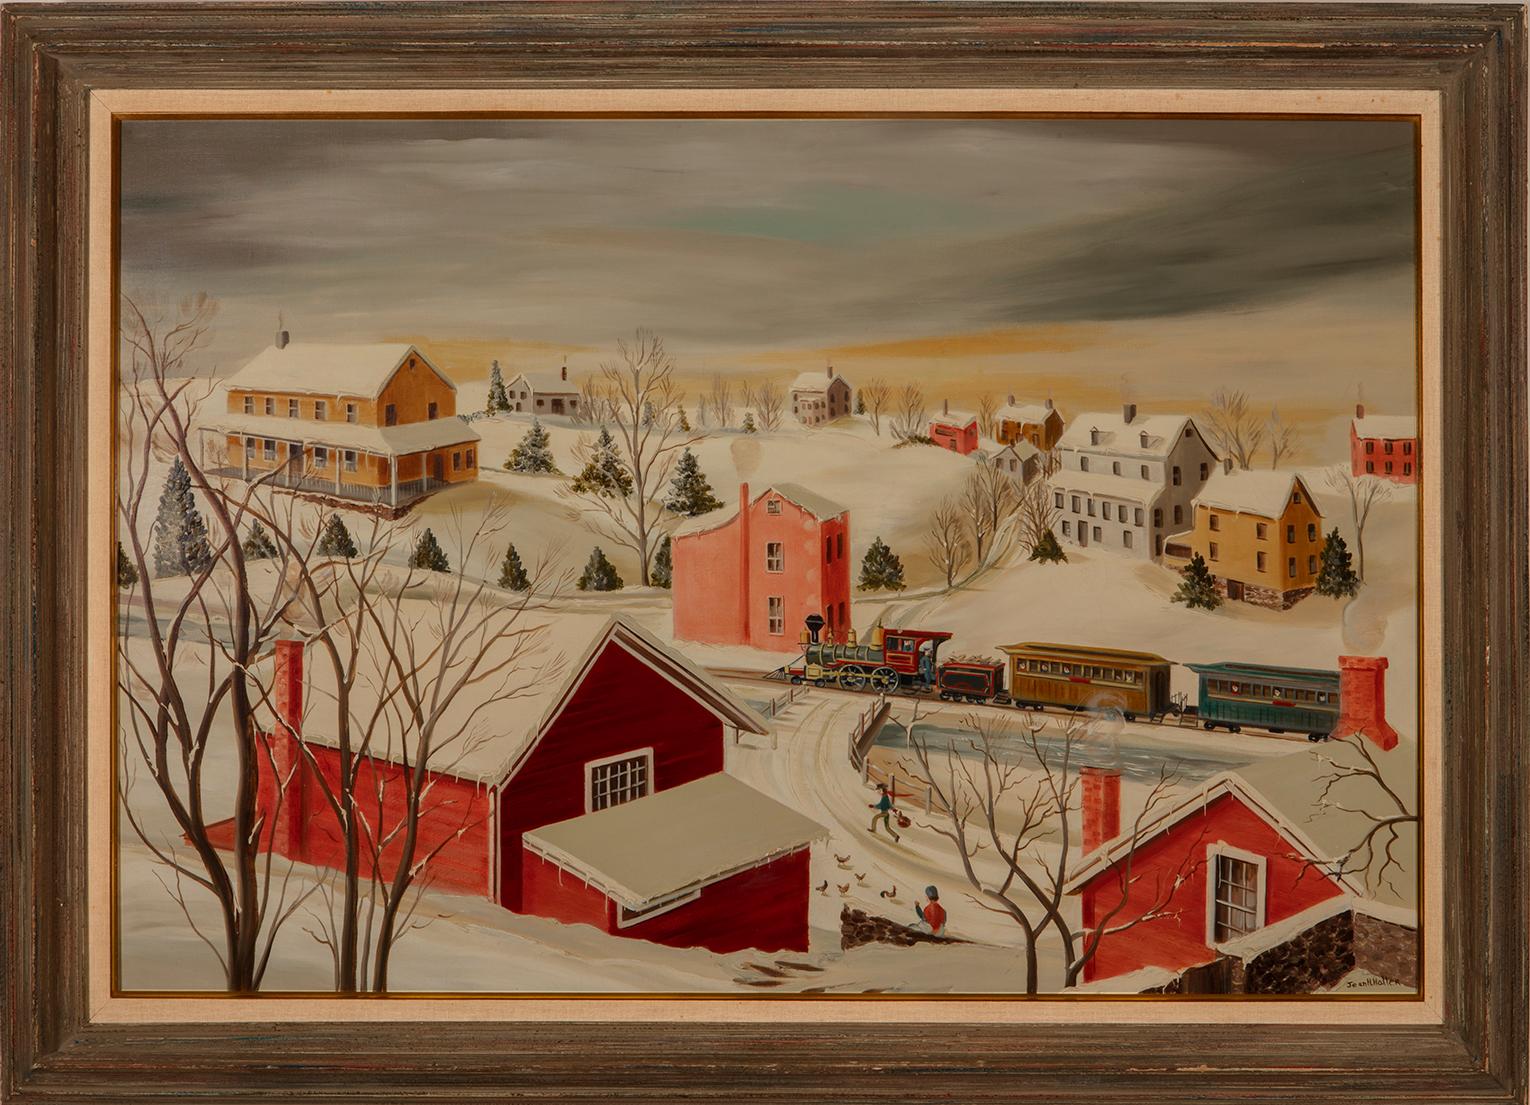 Jean H. Halter Landscape Painting - "Morning Train"